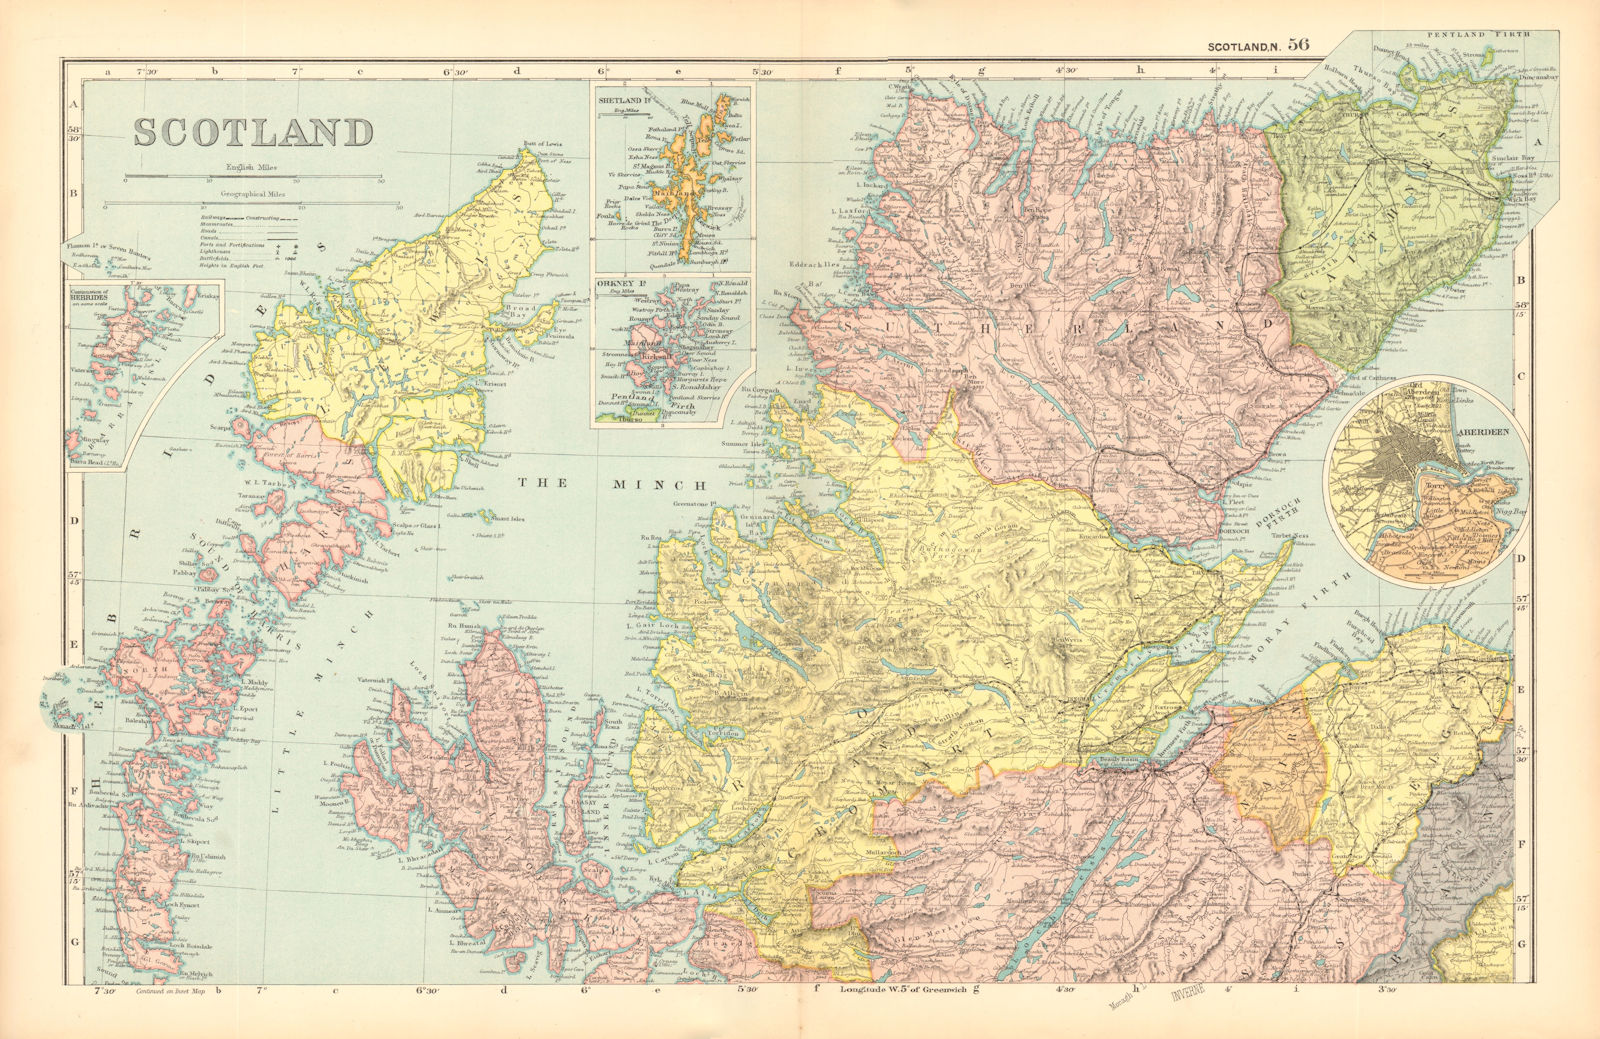 SCOTLAND HIGHLANDS & ISLANDS. Parliamentary divisions/boroughs. BACON 1904 map